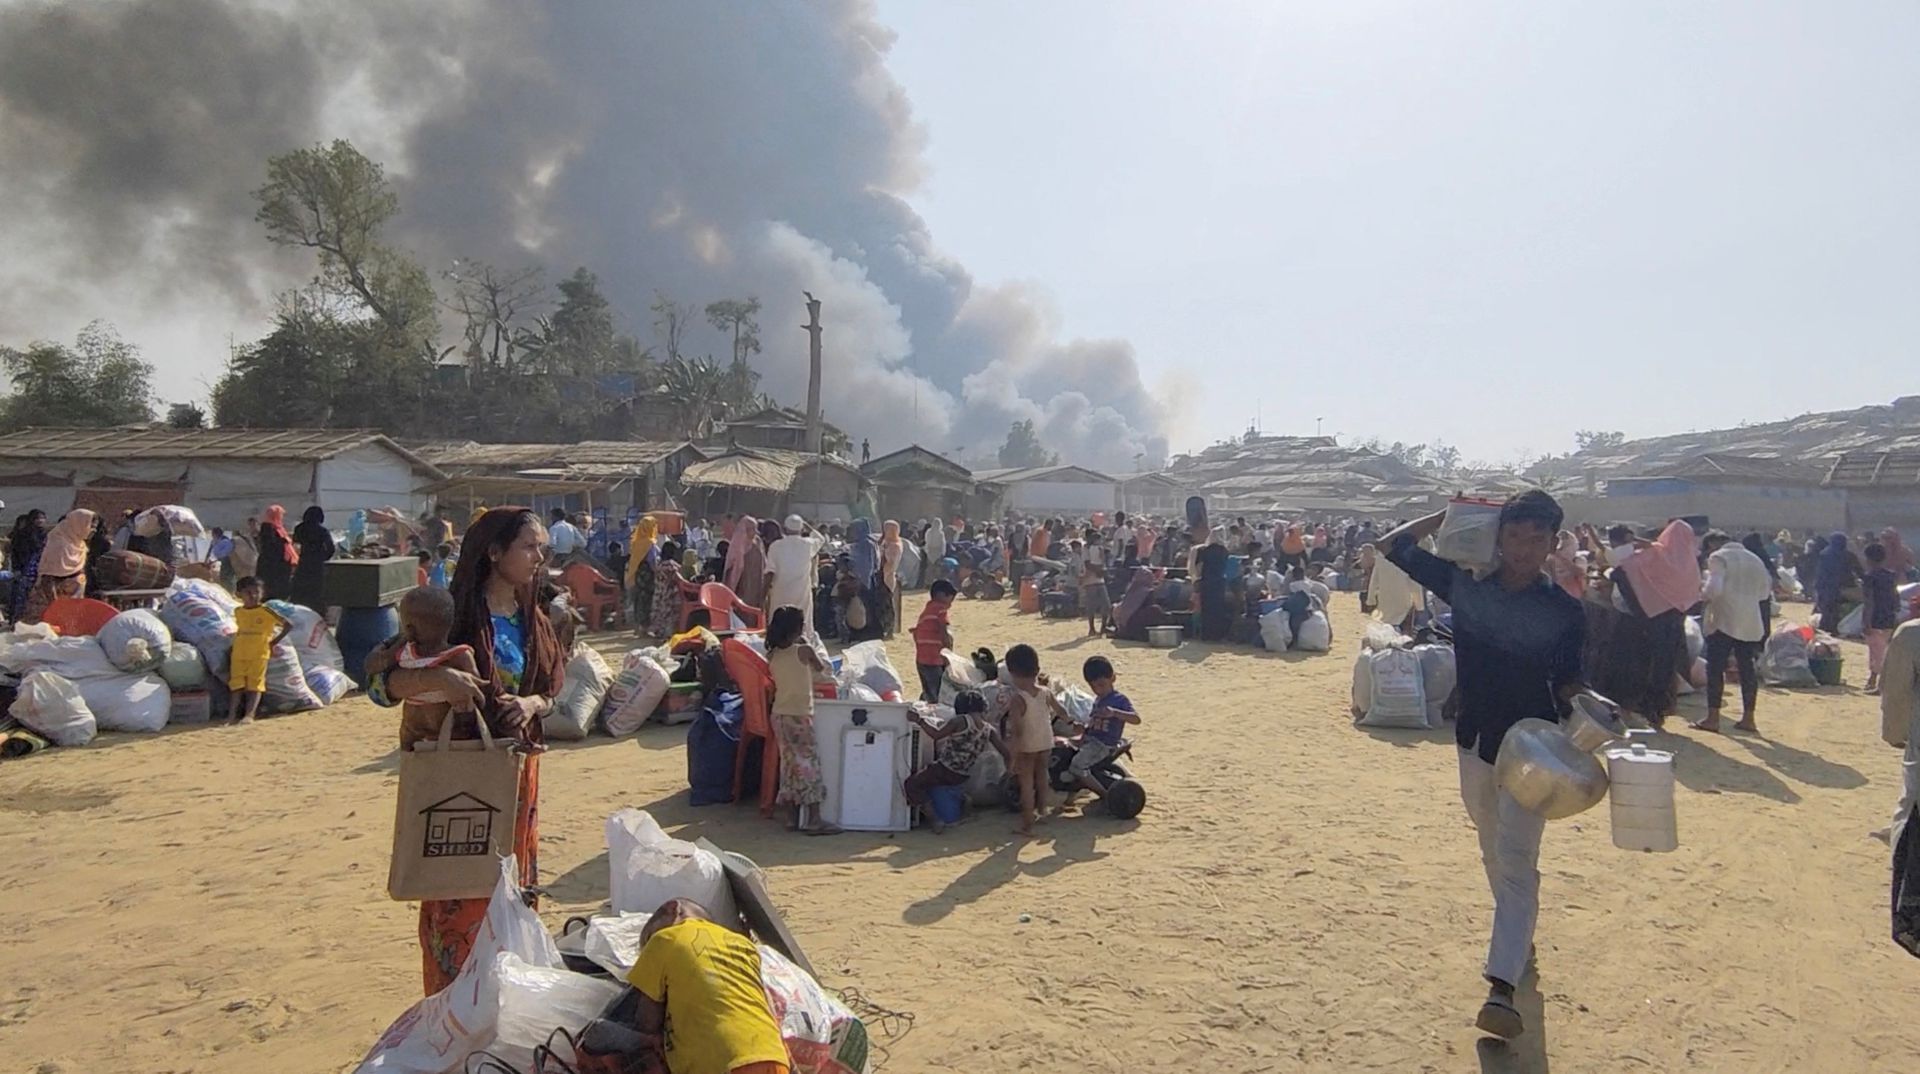 Campamento de refugiados en Bangladesh por incendio forestal masivo. - Foto Mohammed salim Khan/Reuters